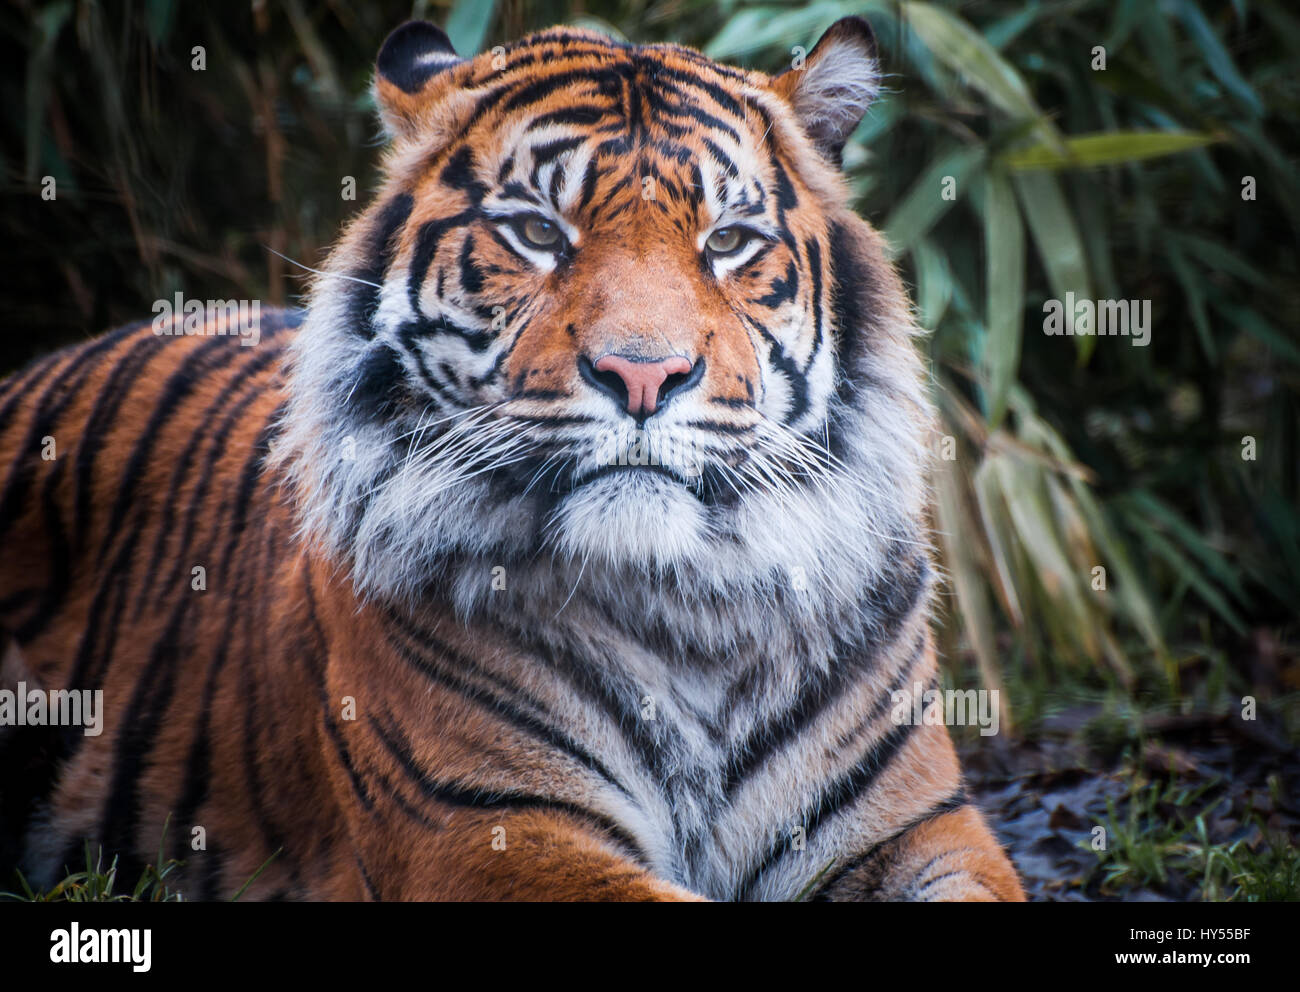 A Sumatran Tiger sitting in the undergrowth Stock Photo